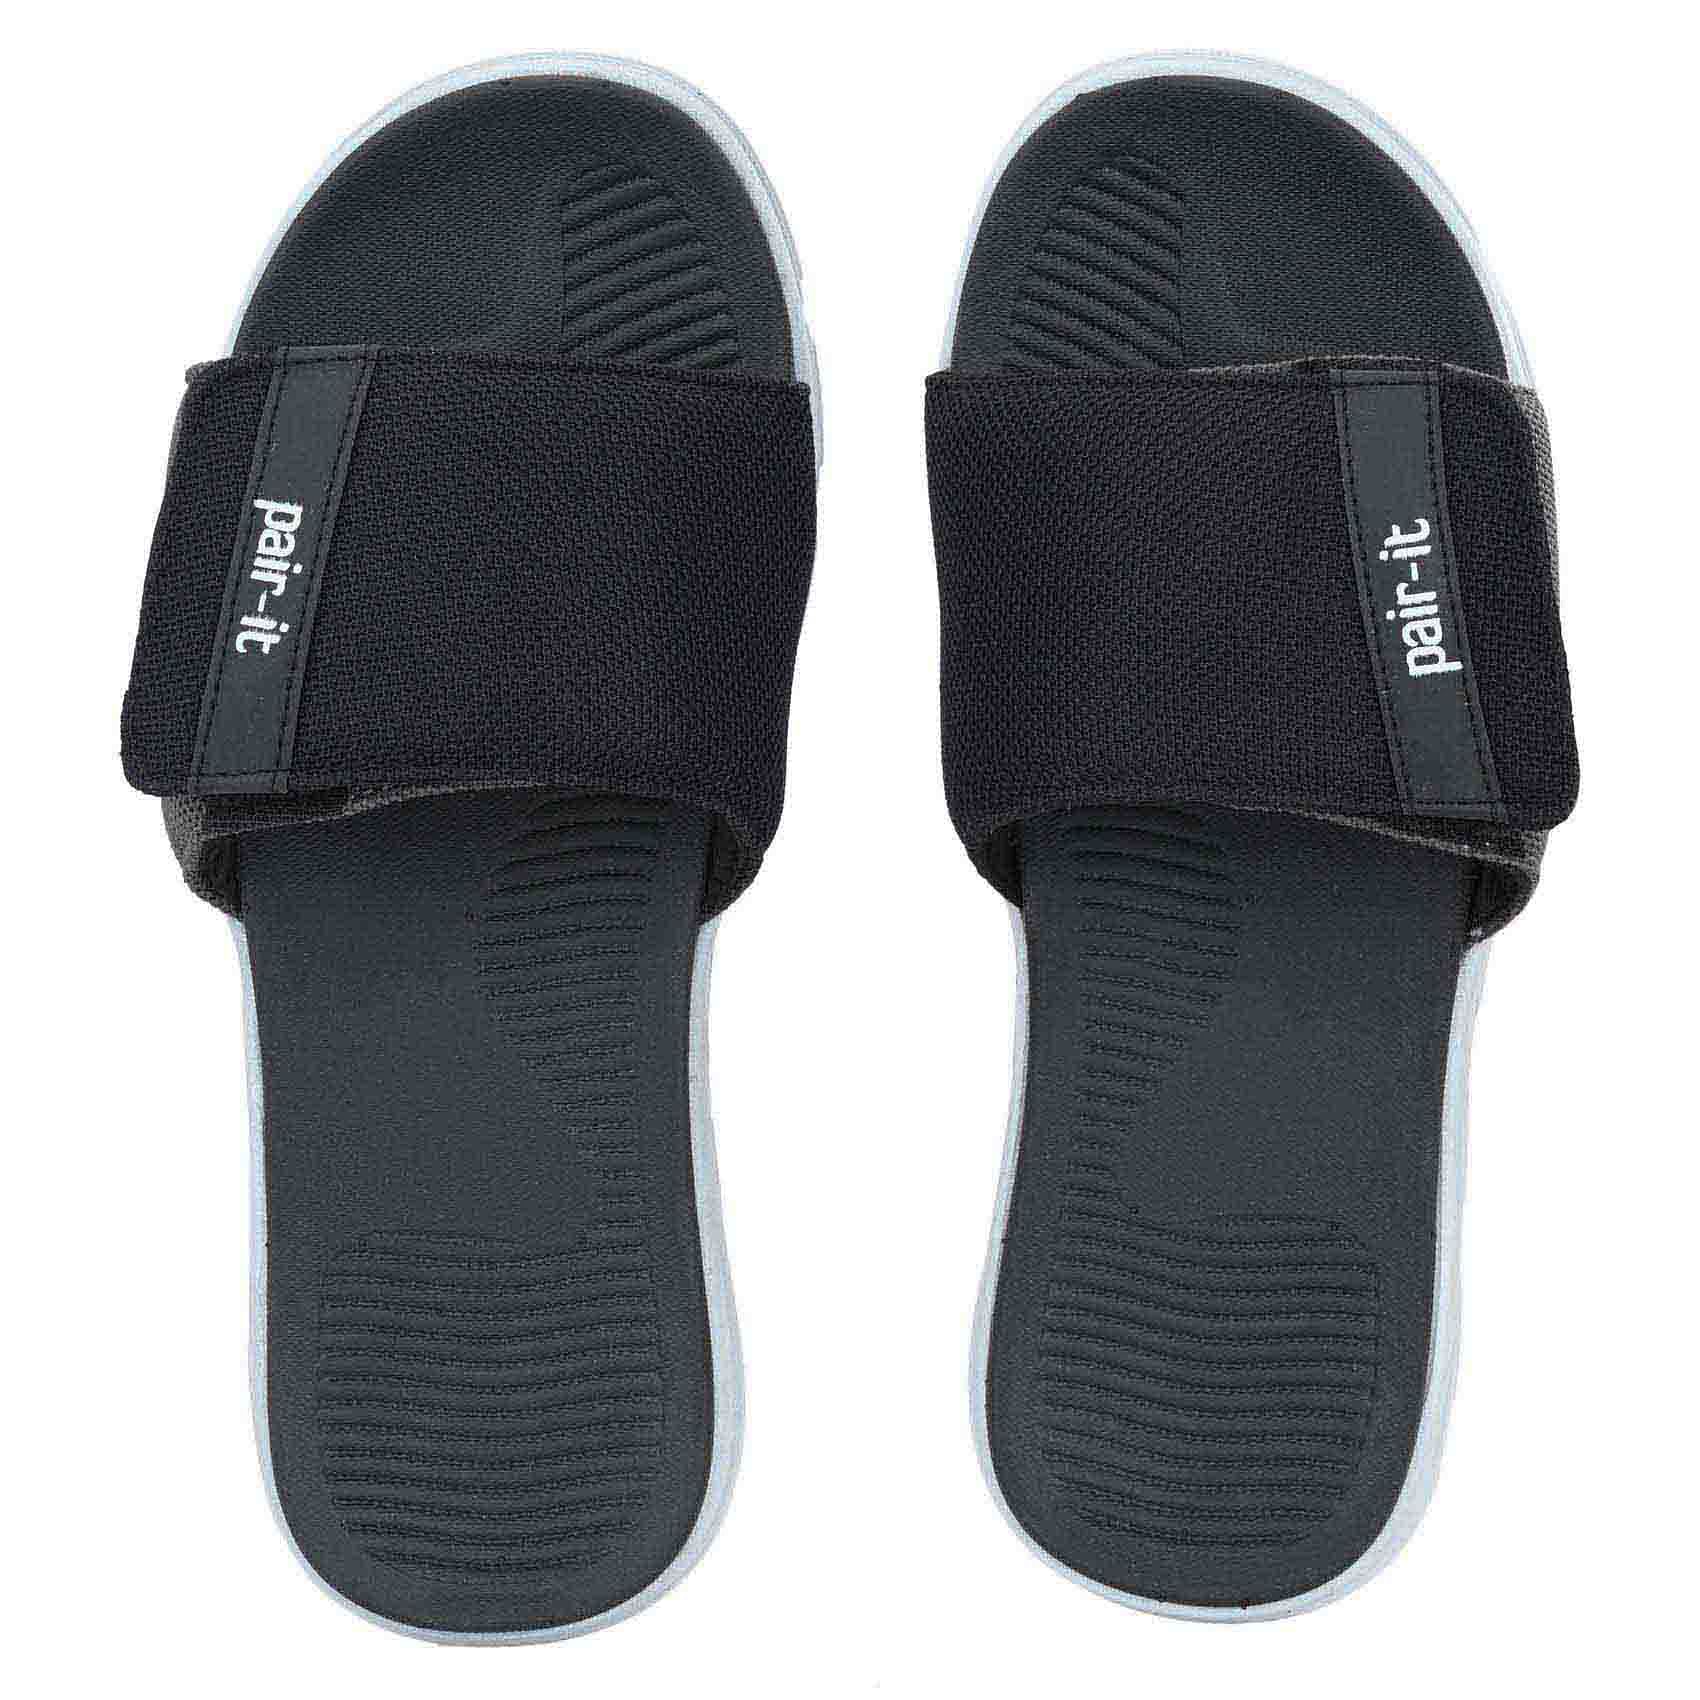 Pair-it Men's Rubberised EVA Slippers-LZ-Slippers125-Black/Grey